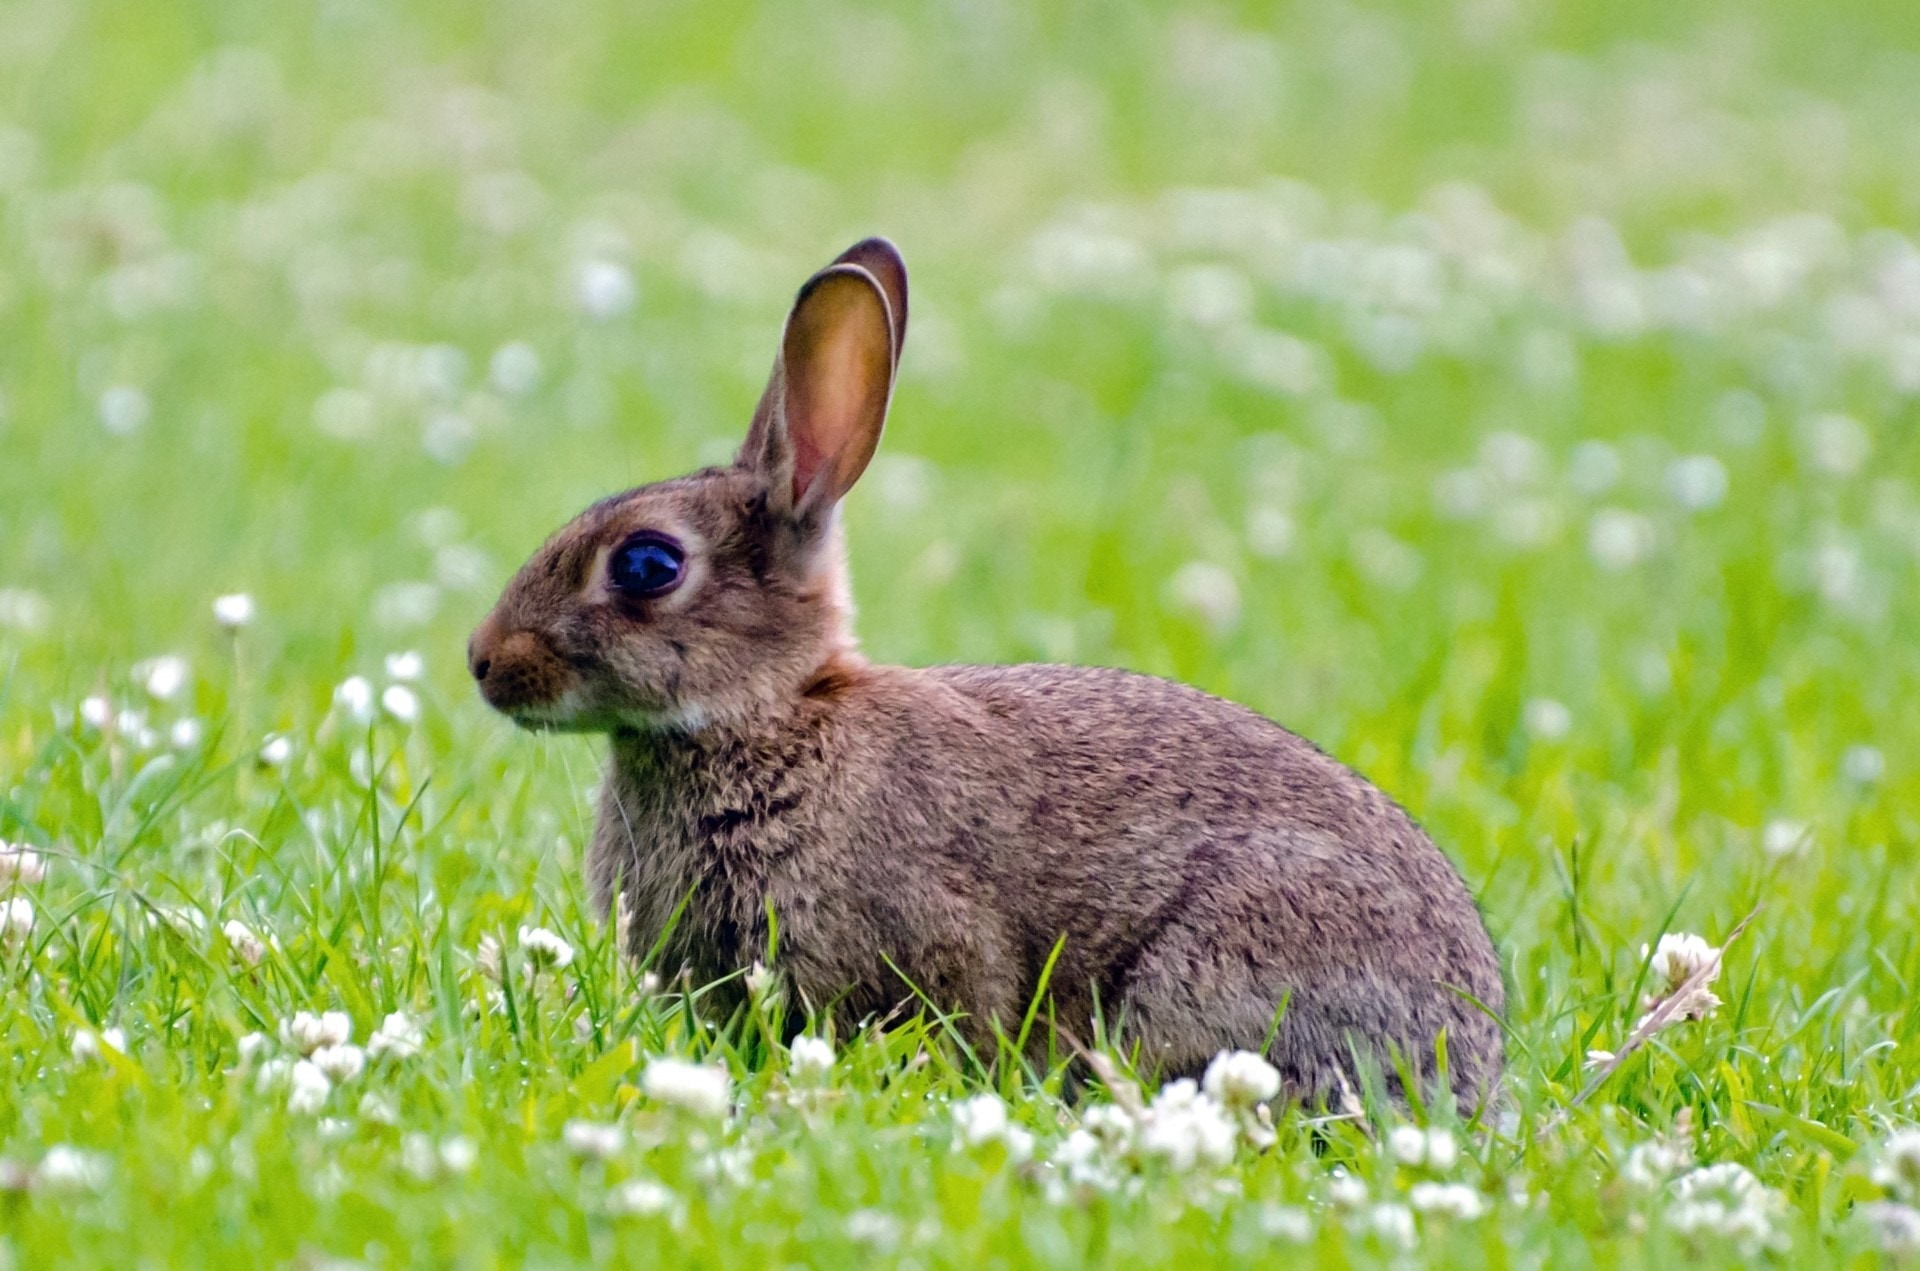 Rabbit, Brown, Spring, Mammal, Green, grass, one animal